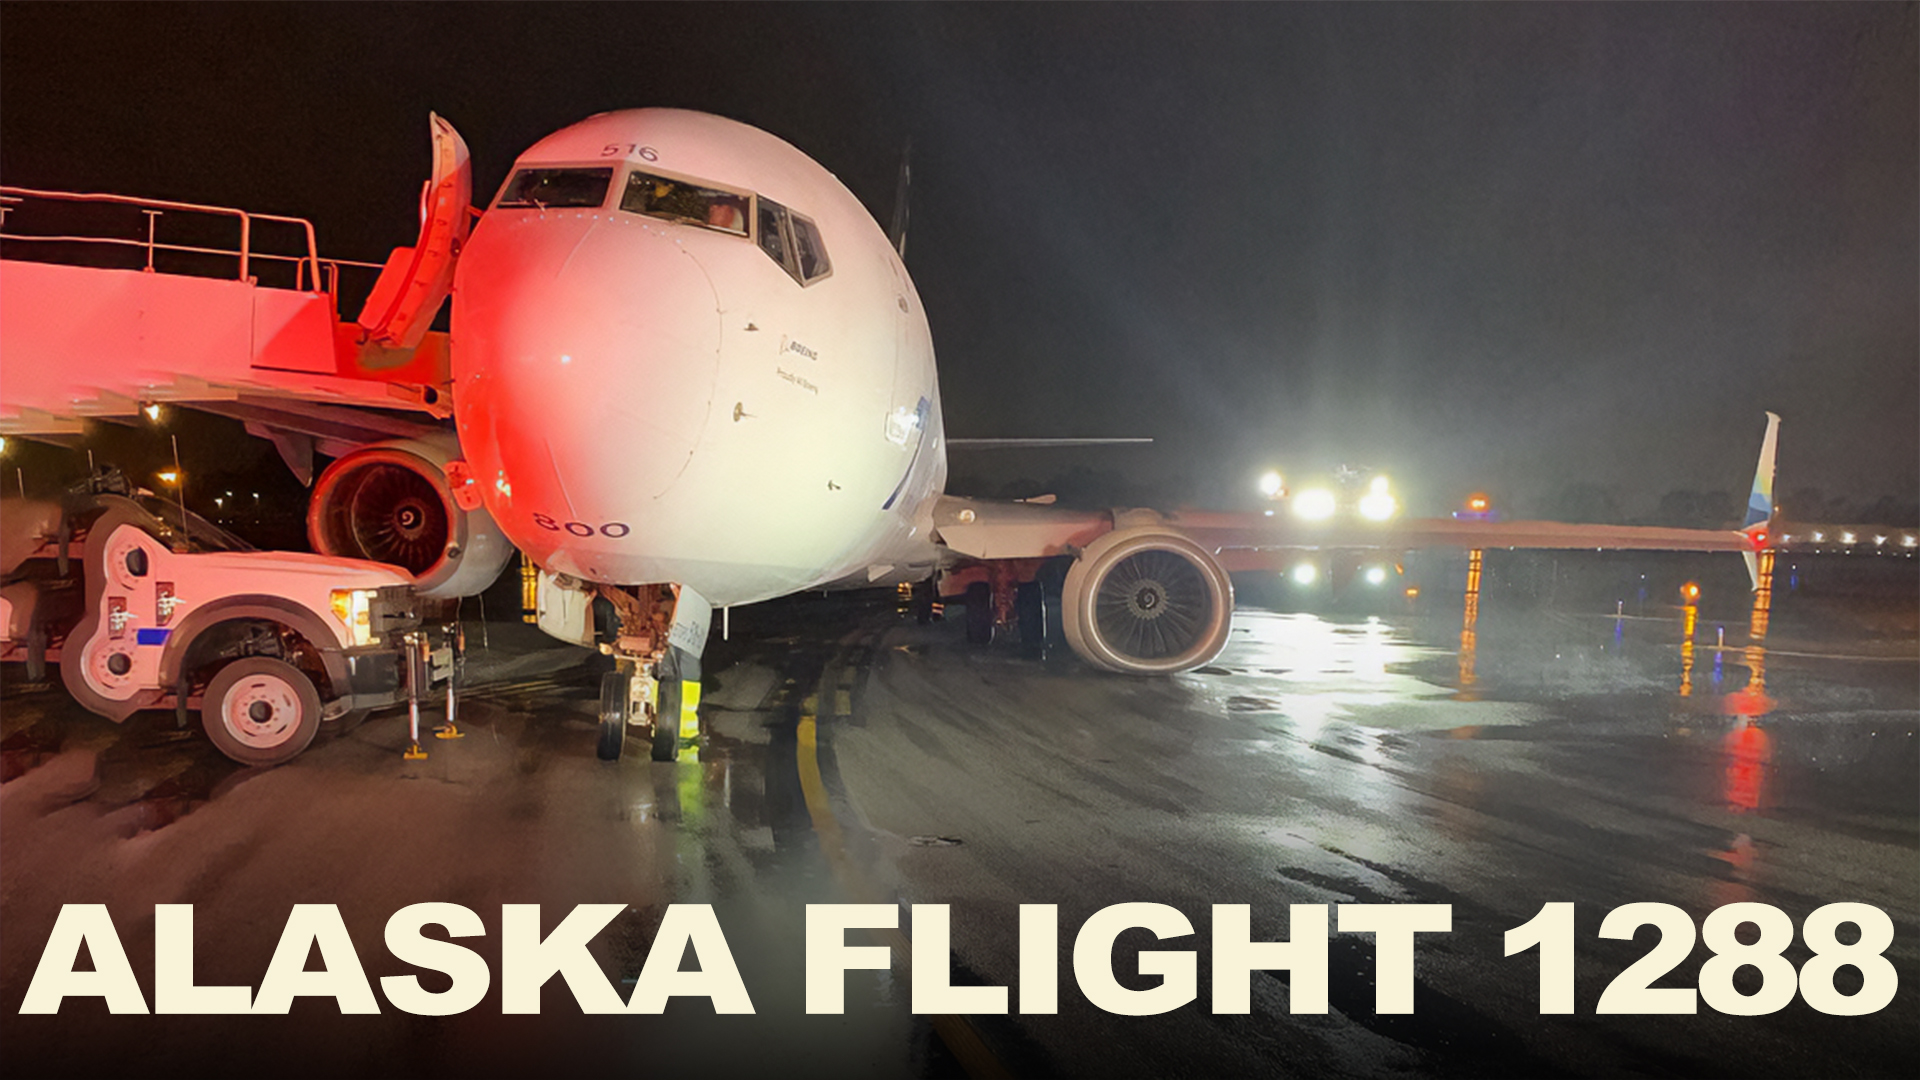 Alaska Airlines Flight 1288 John Wayne-Orange County Airport Air Crash Investigation